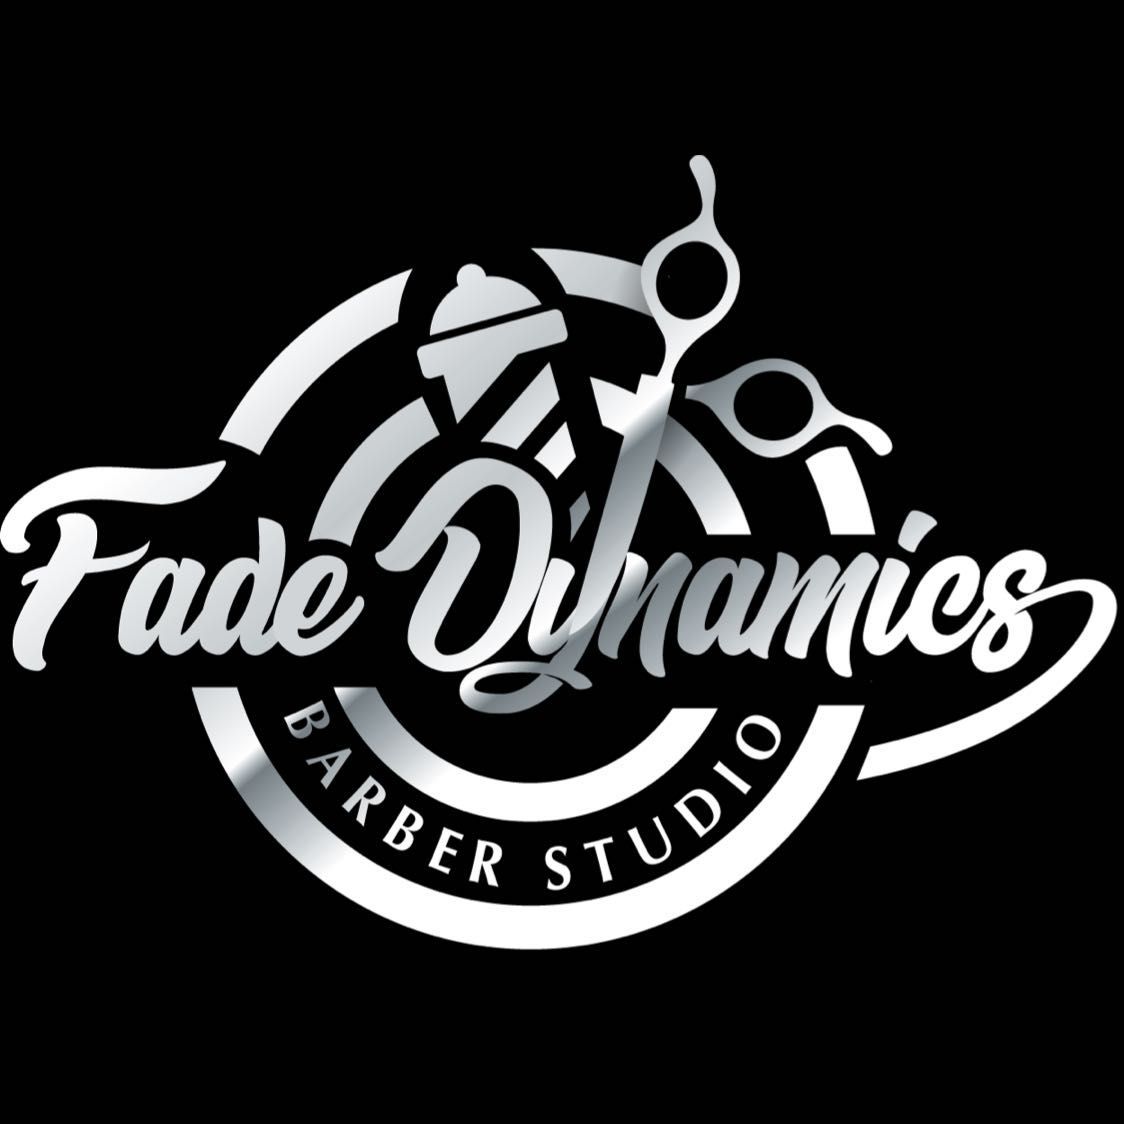 Christian Camarena (Fade Dynamics Barber Studio), 309 Ruby Street, Joliet, 60436